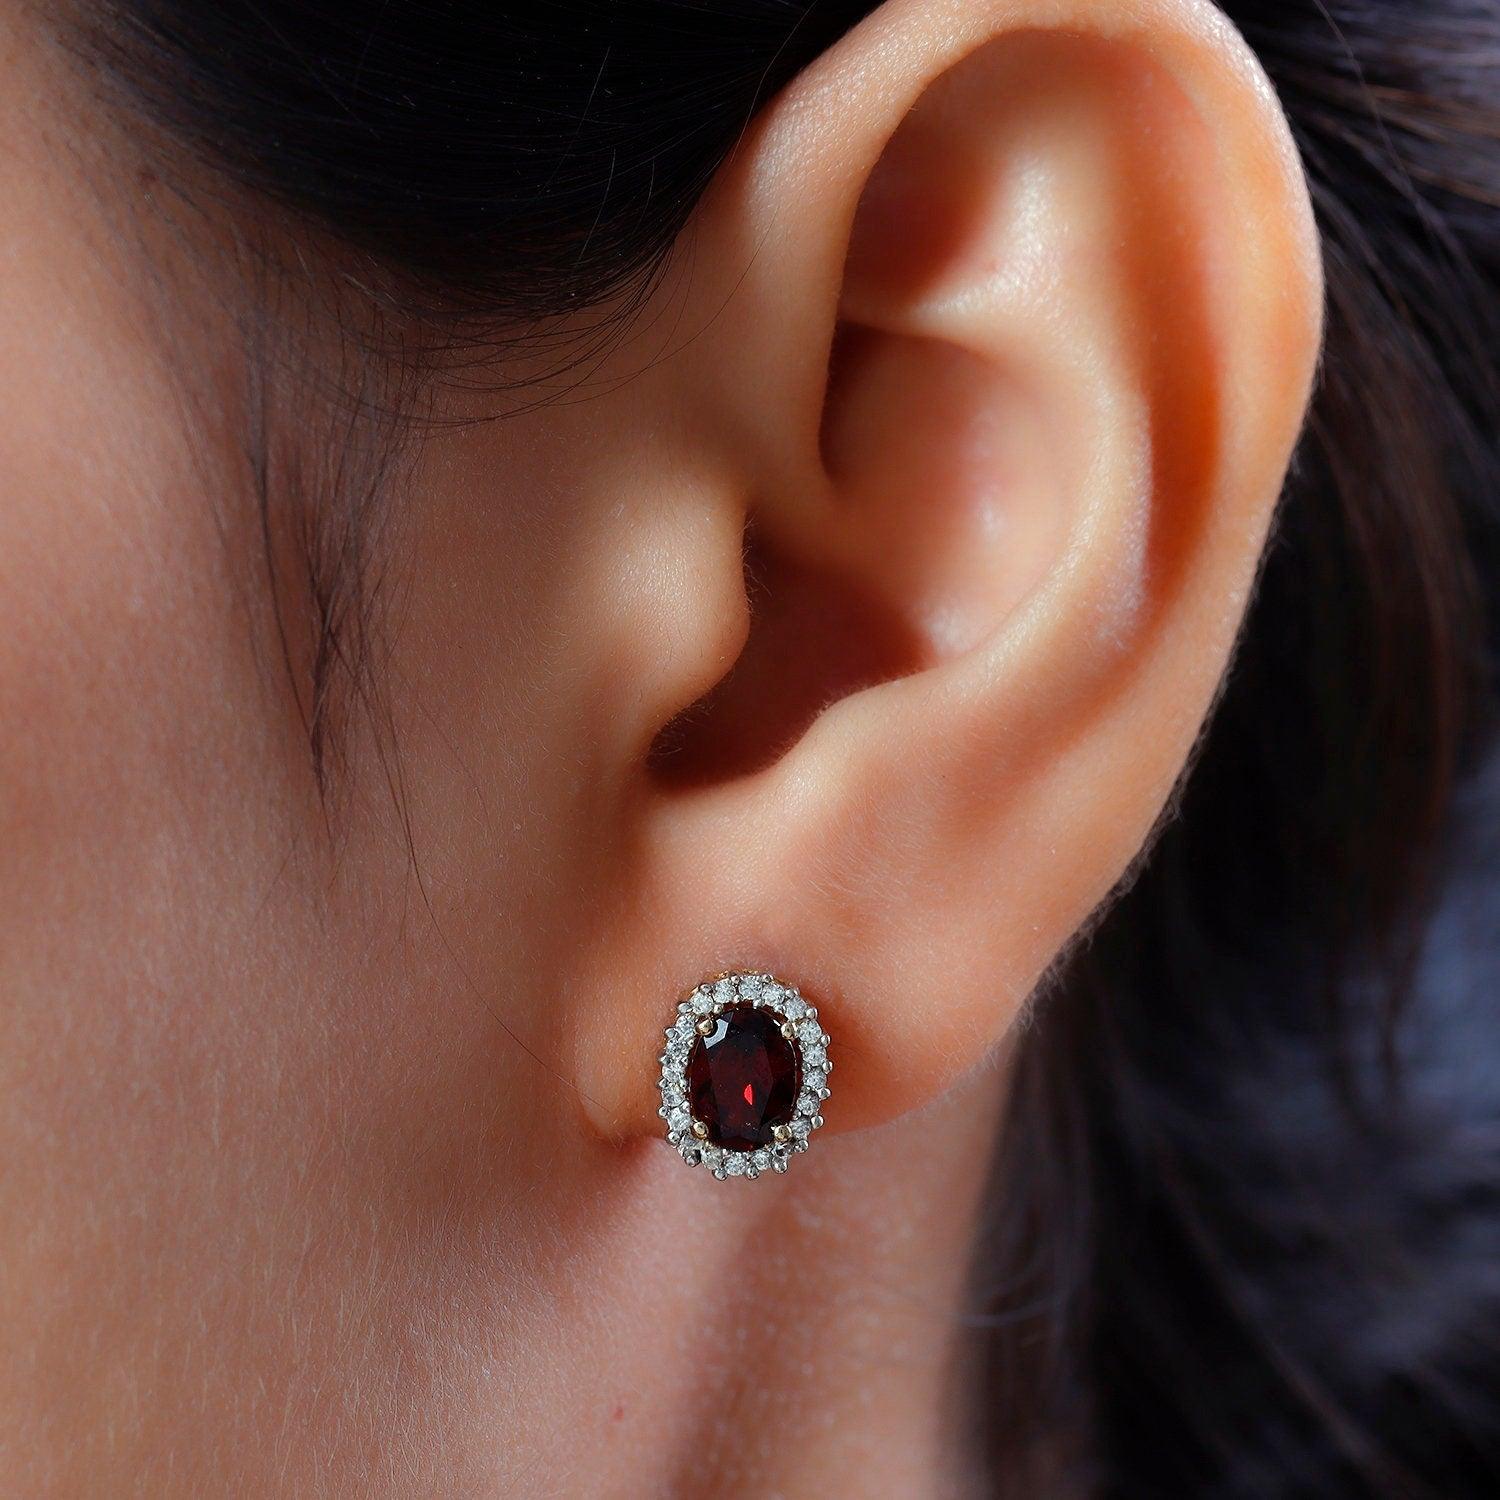 Halo Bridal Studs, Red Garnet Studs, January birthstone earrings, 925 Silver Stud , Halo Stud Earring, Oval Studs, Classic Halo Earrings - Inspiring Jewellery